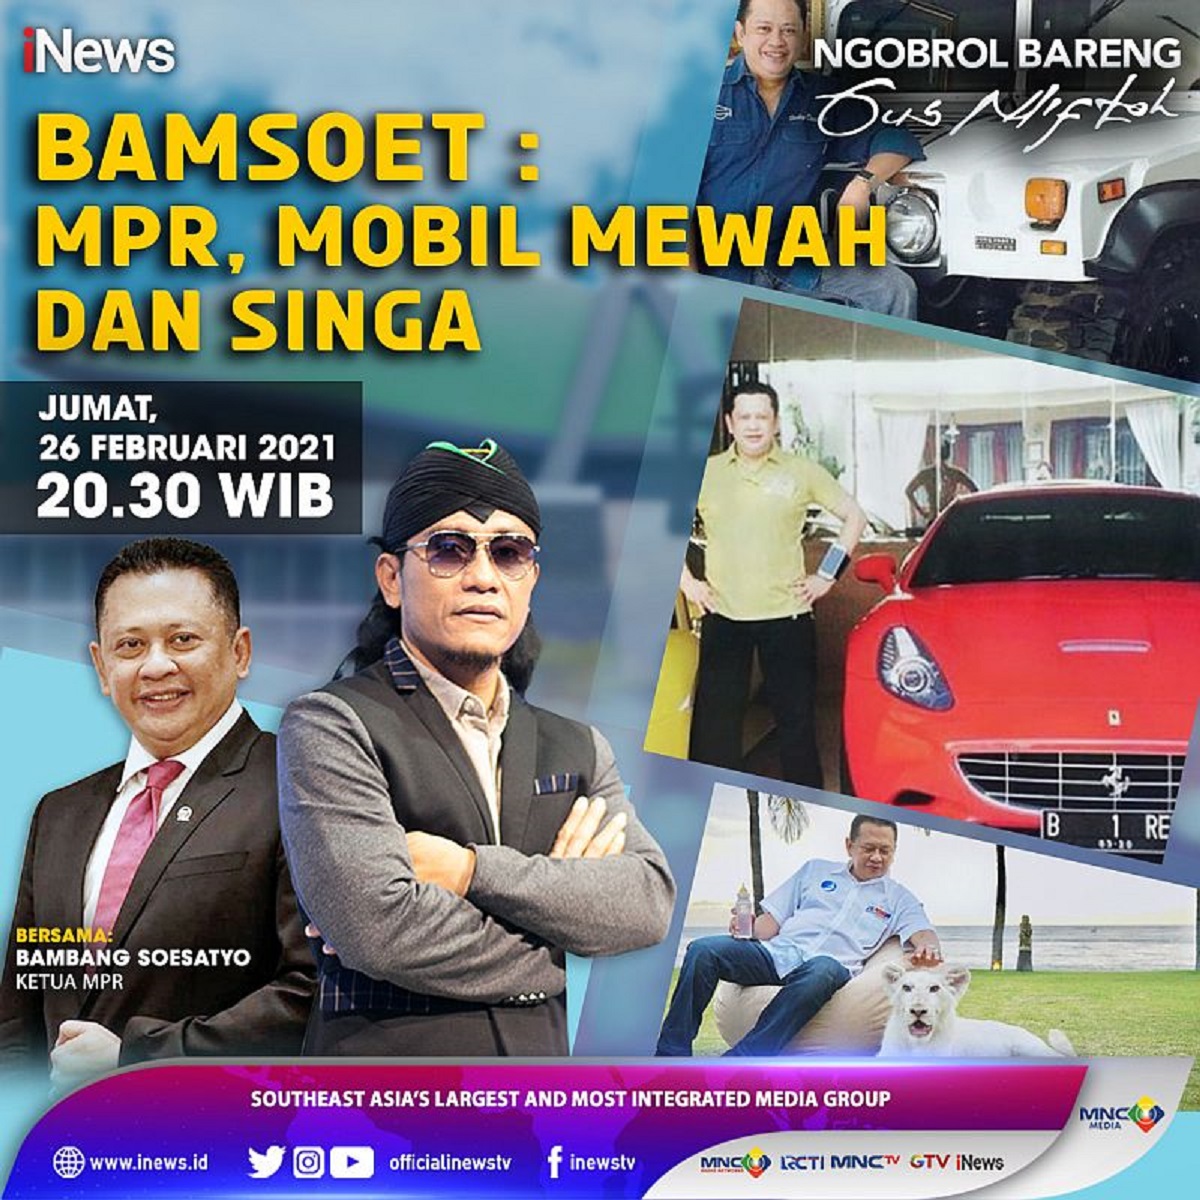 Ketua MPR Bambang Soesatyo : Antara MPR, Mobil Mewah dan Singa